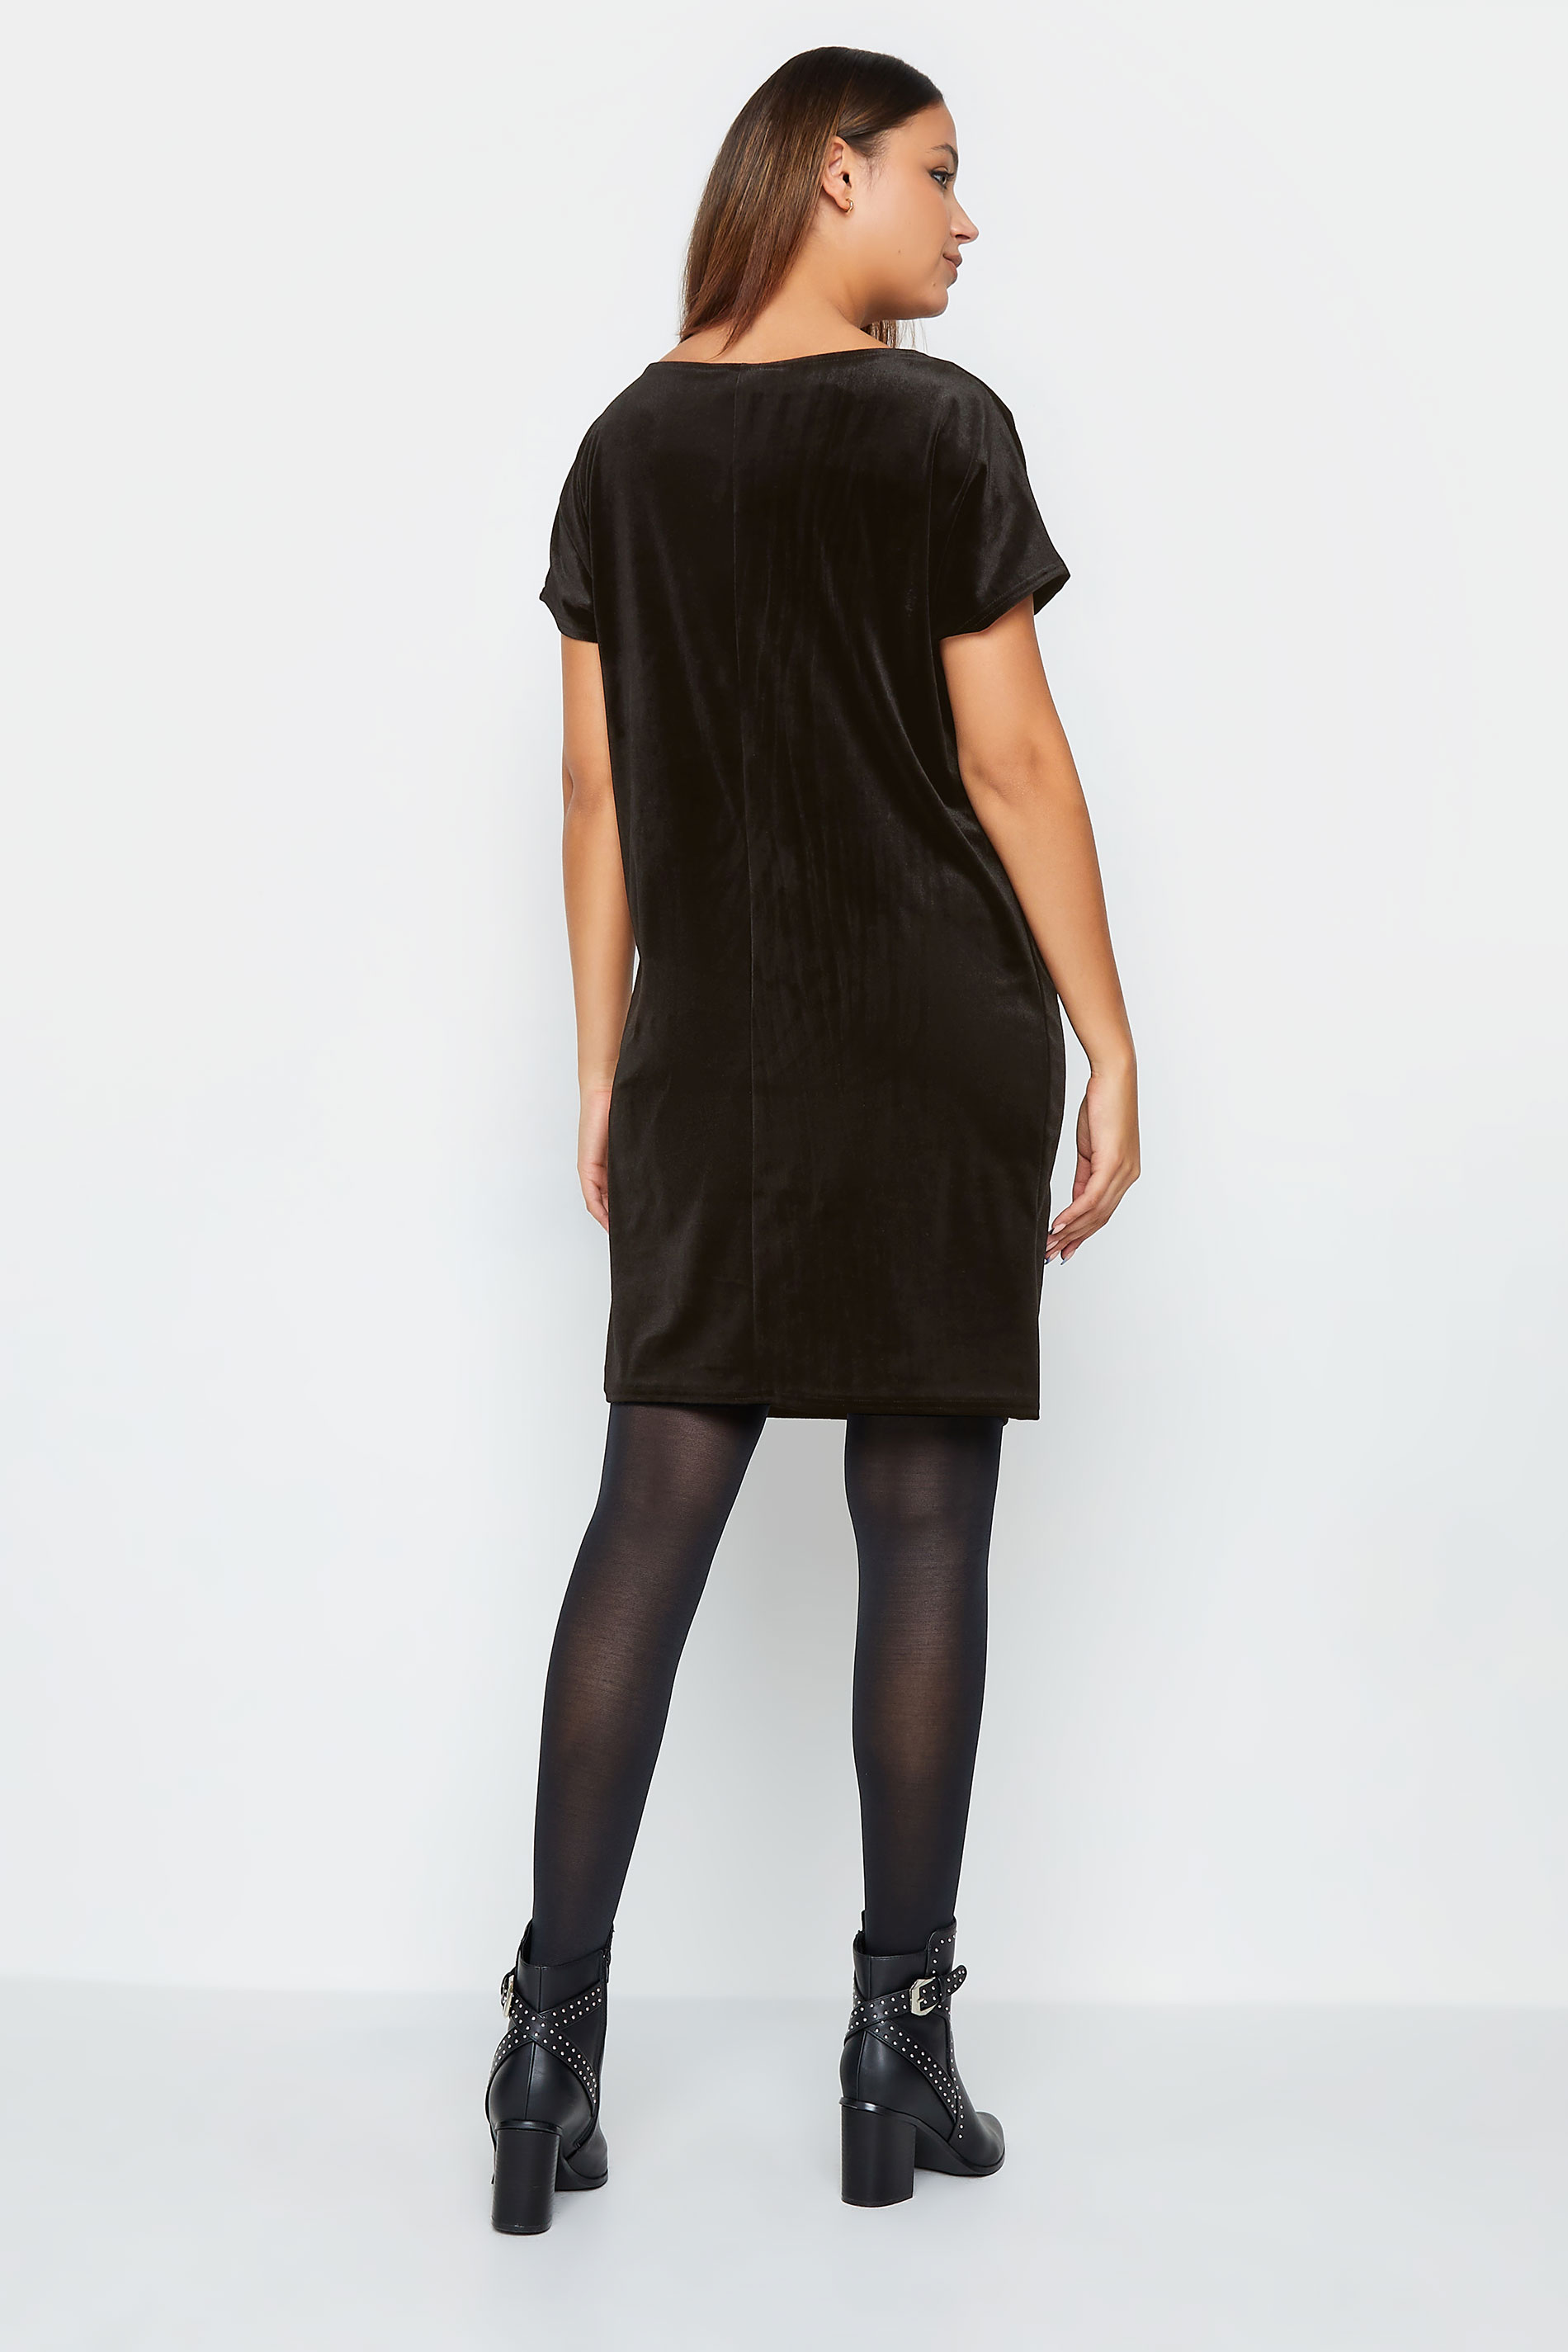 LTS Tall Womens Black Velour T-Shirt Dress | Long Tall Sally  3